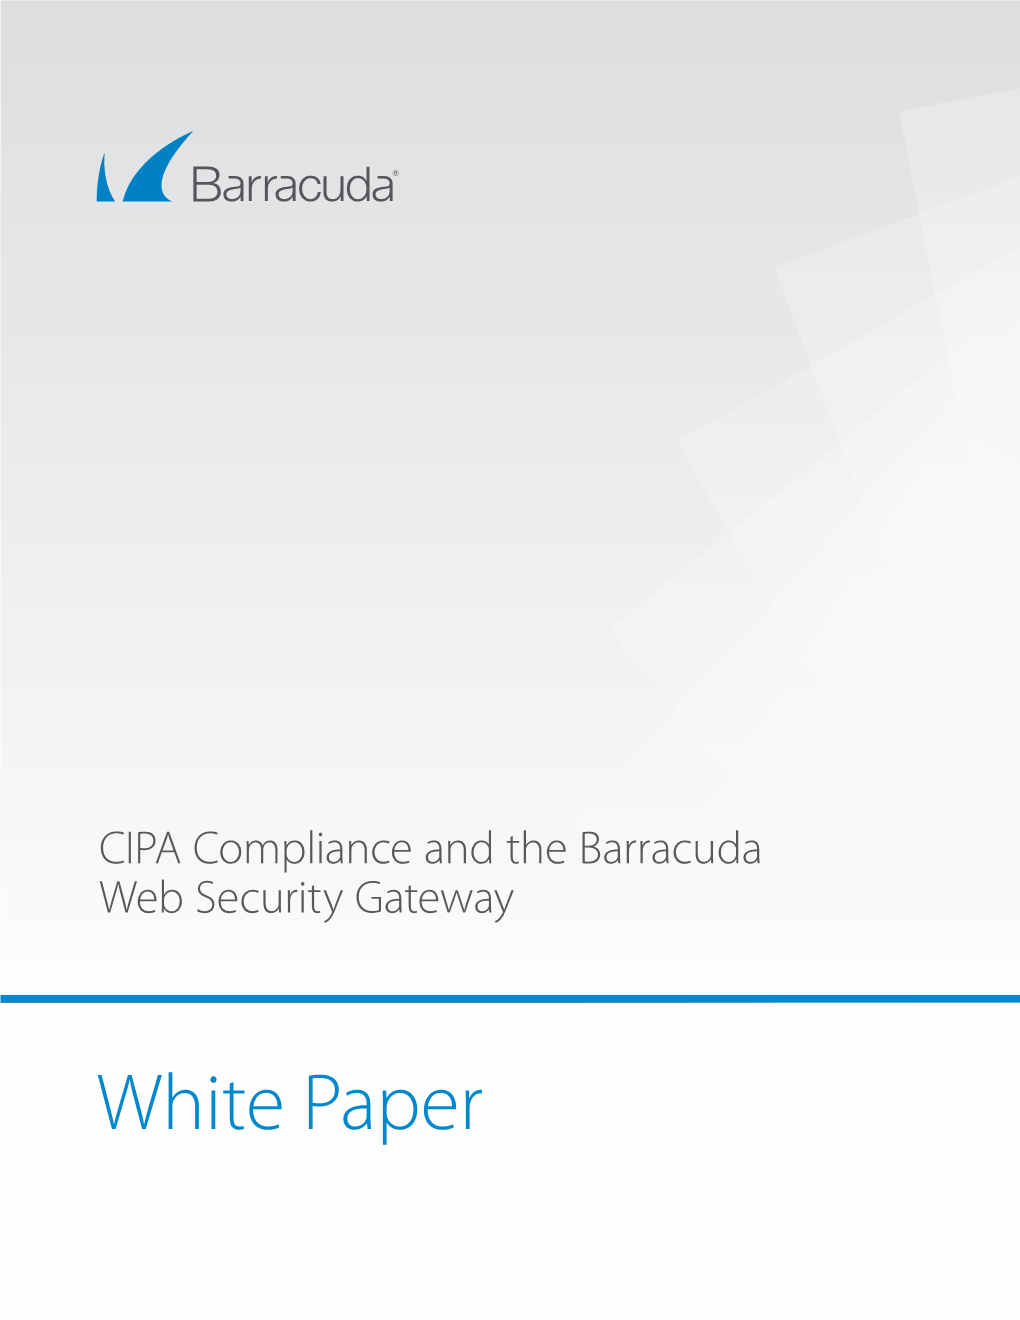 White Paper Barracuda • CIPA Compliance and the Barracuda Web Security Gateway 1